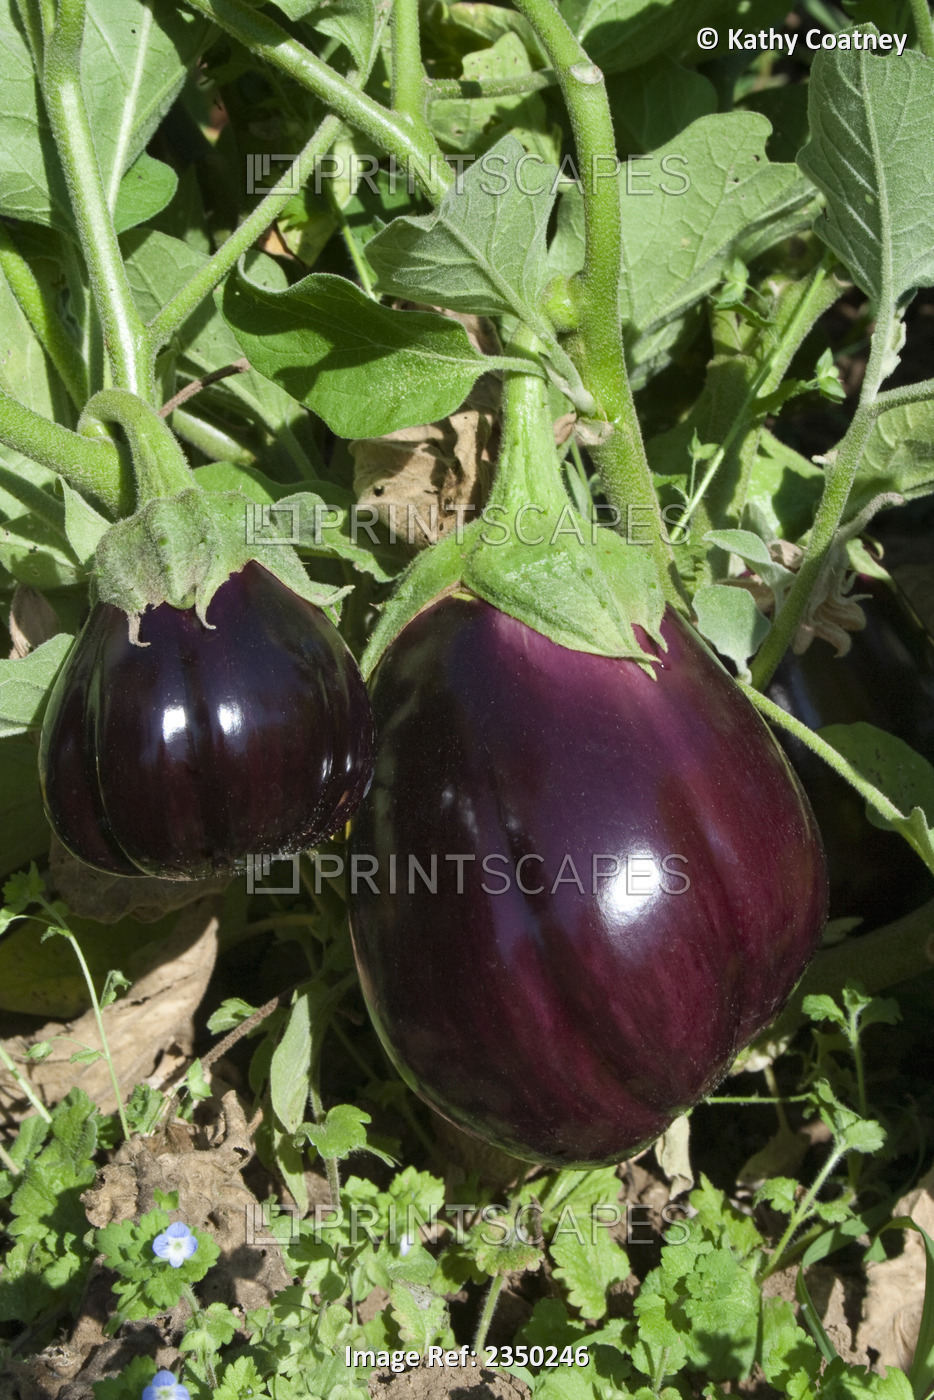 Agriculture - Organic eggplants growing on the vine / Dixon, California, USA.